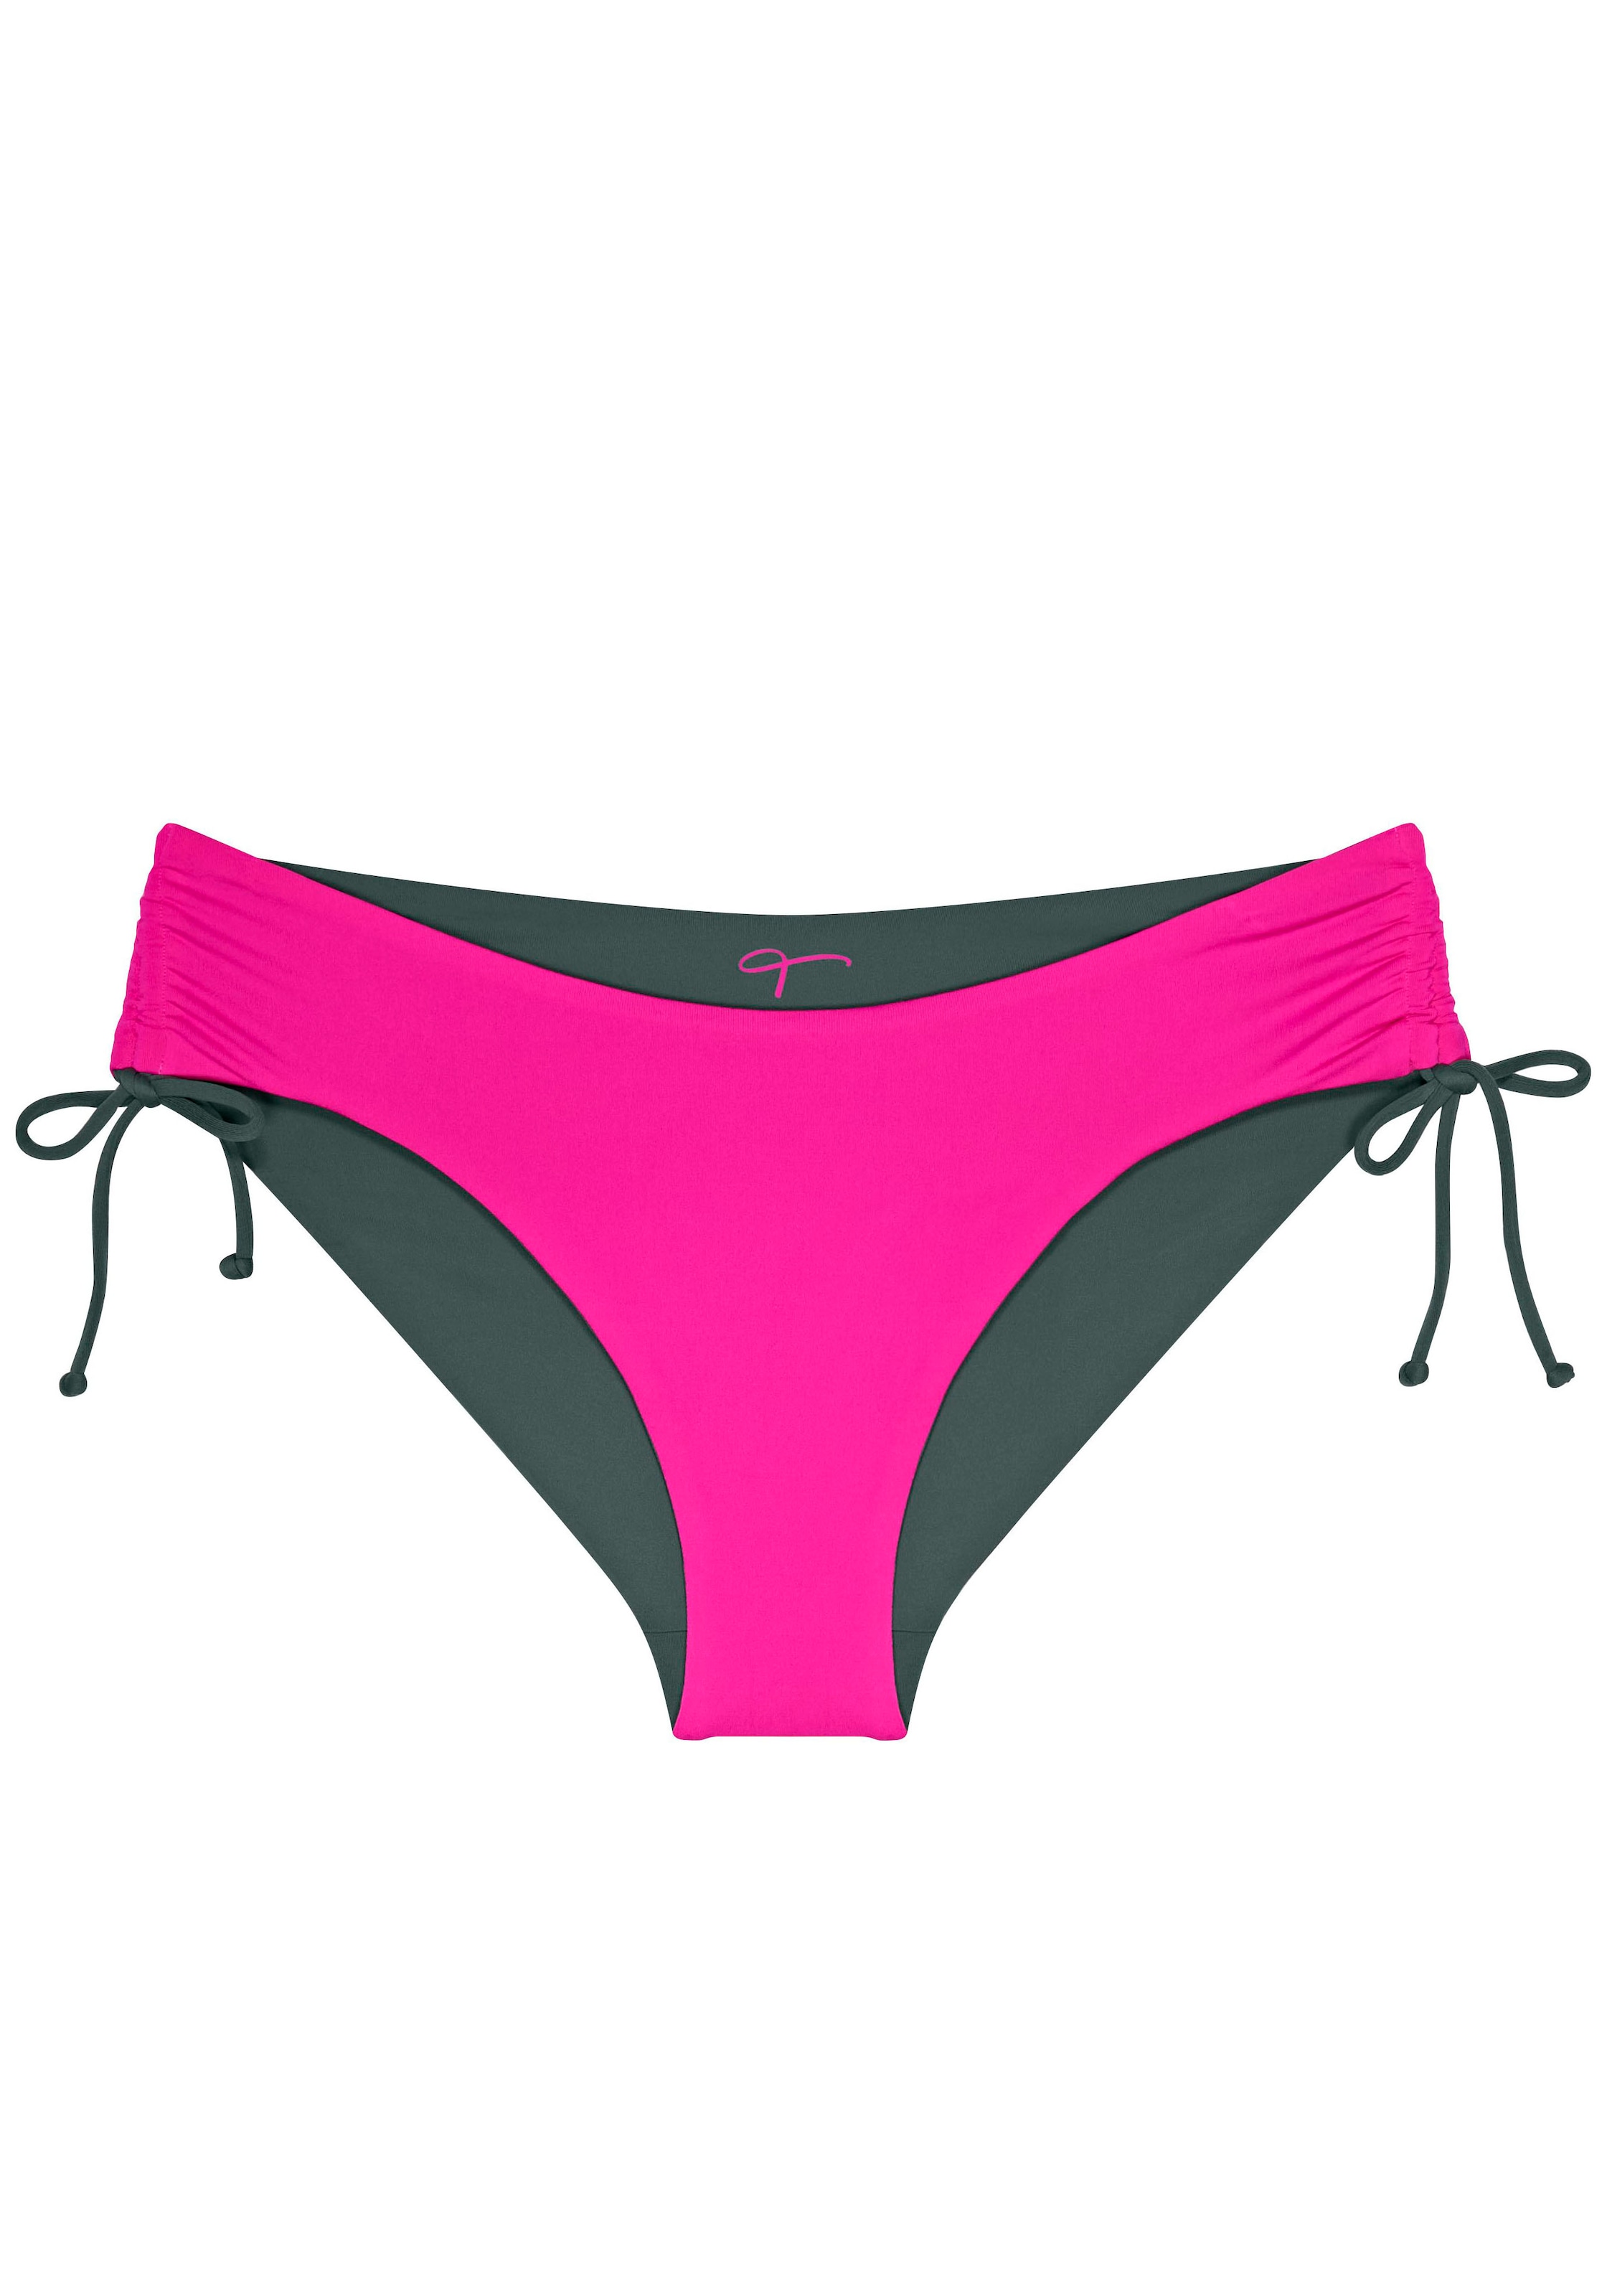 Triumph Bikini-Hose »Free Smart Midi sd«, ein Style zwei Farben, 2-in-1 Bikinislip beidseitig tragbar